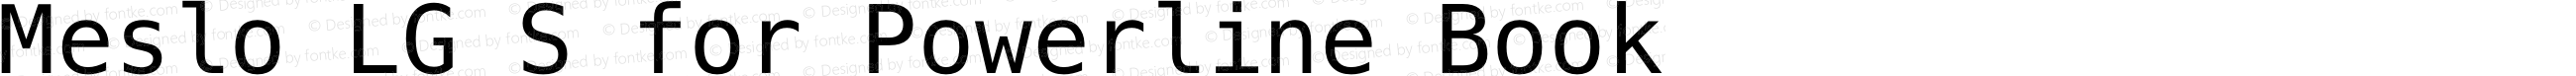 Meslo LG S Regular for Powerline Nerd Font Plus Font Awesome Mono